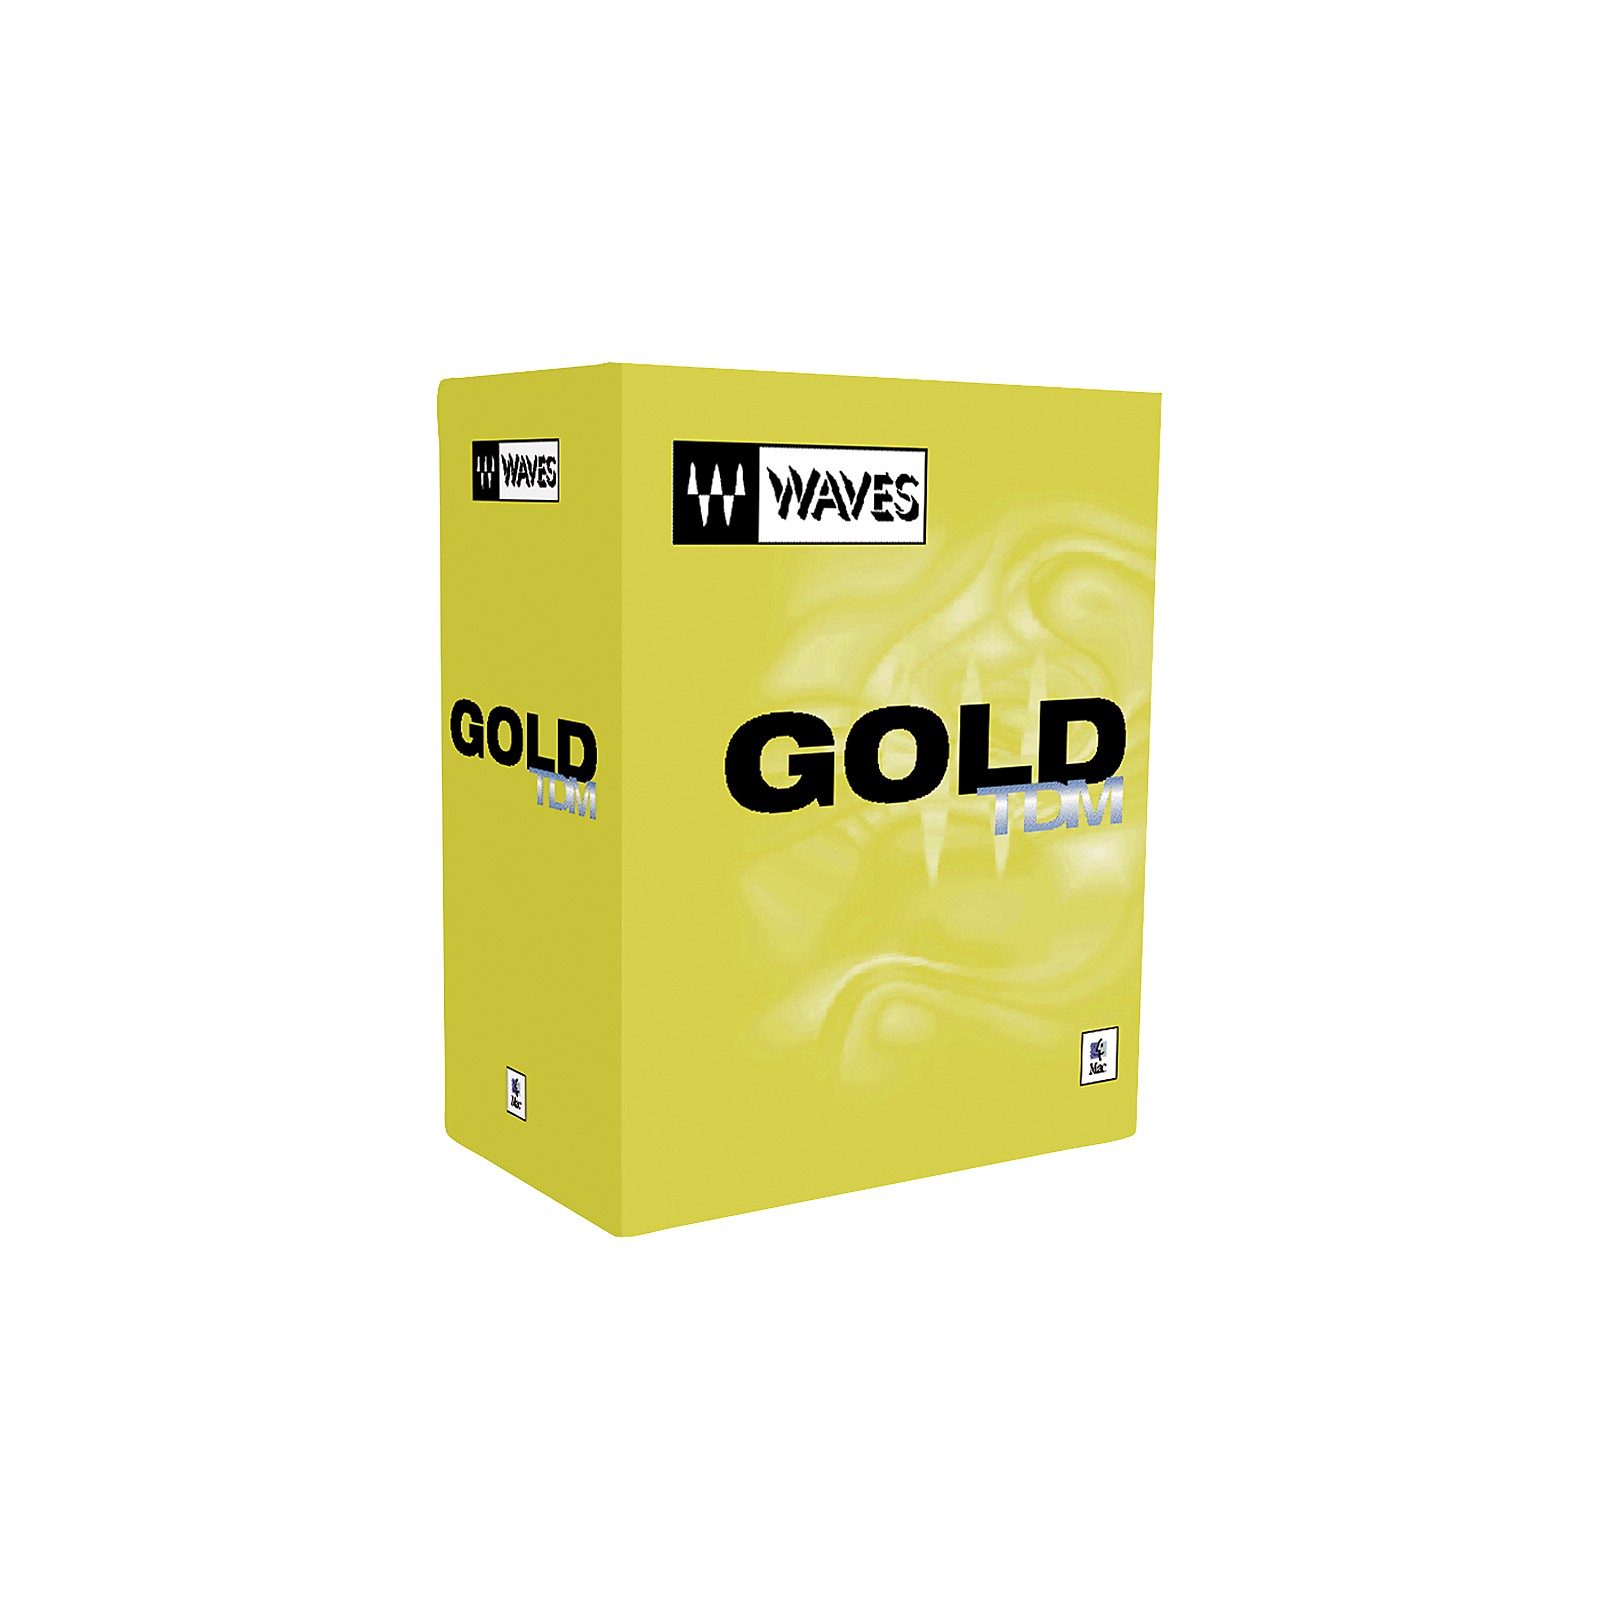 waves gold plugin bundle review